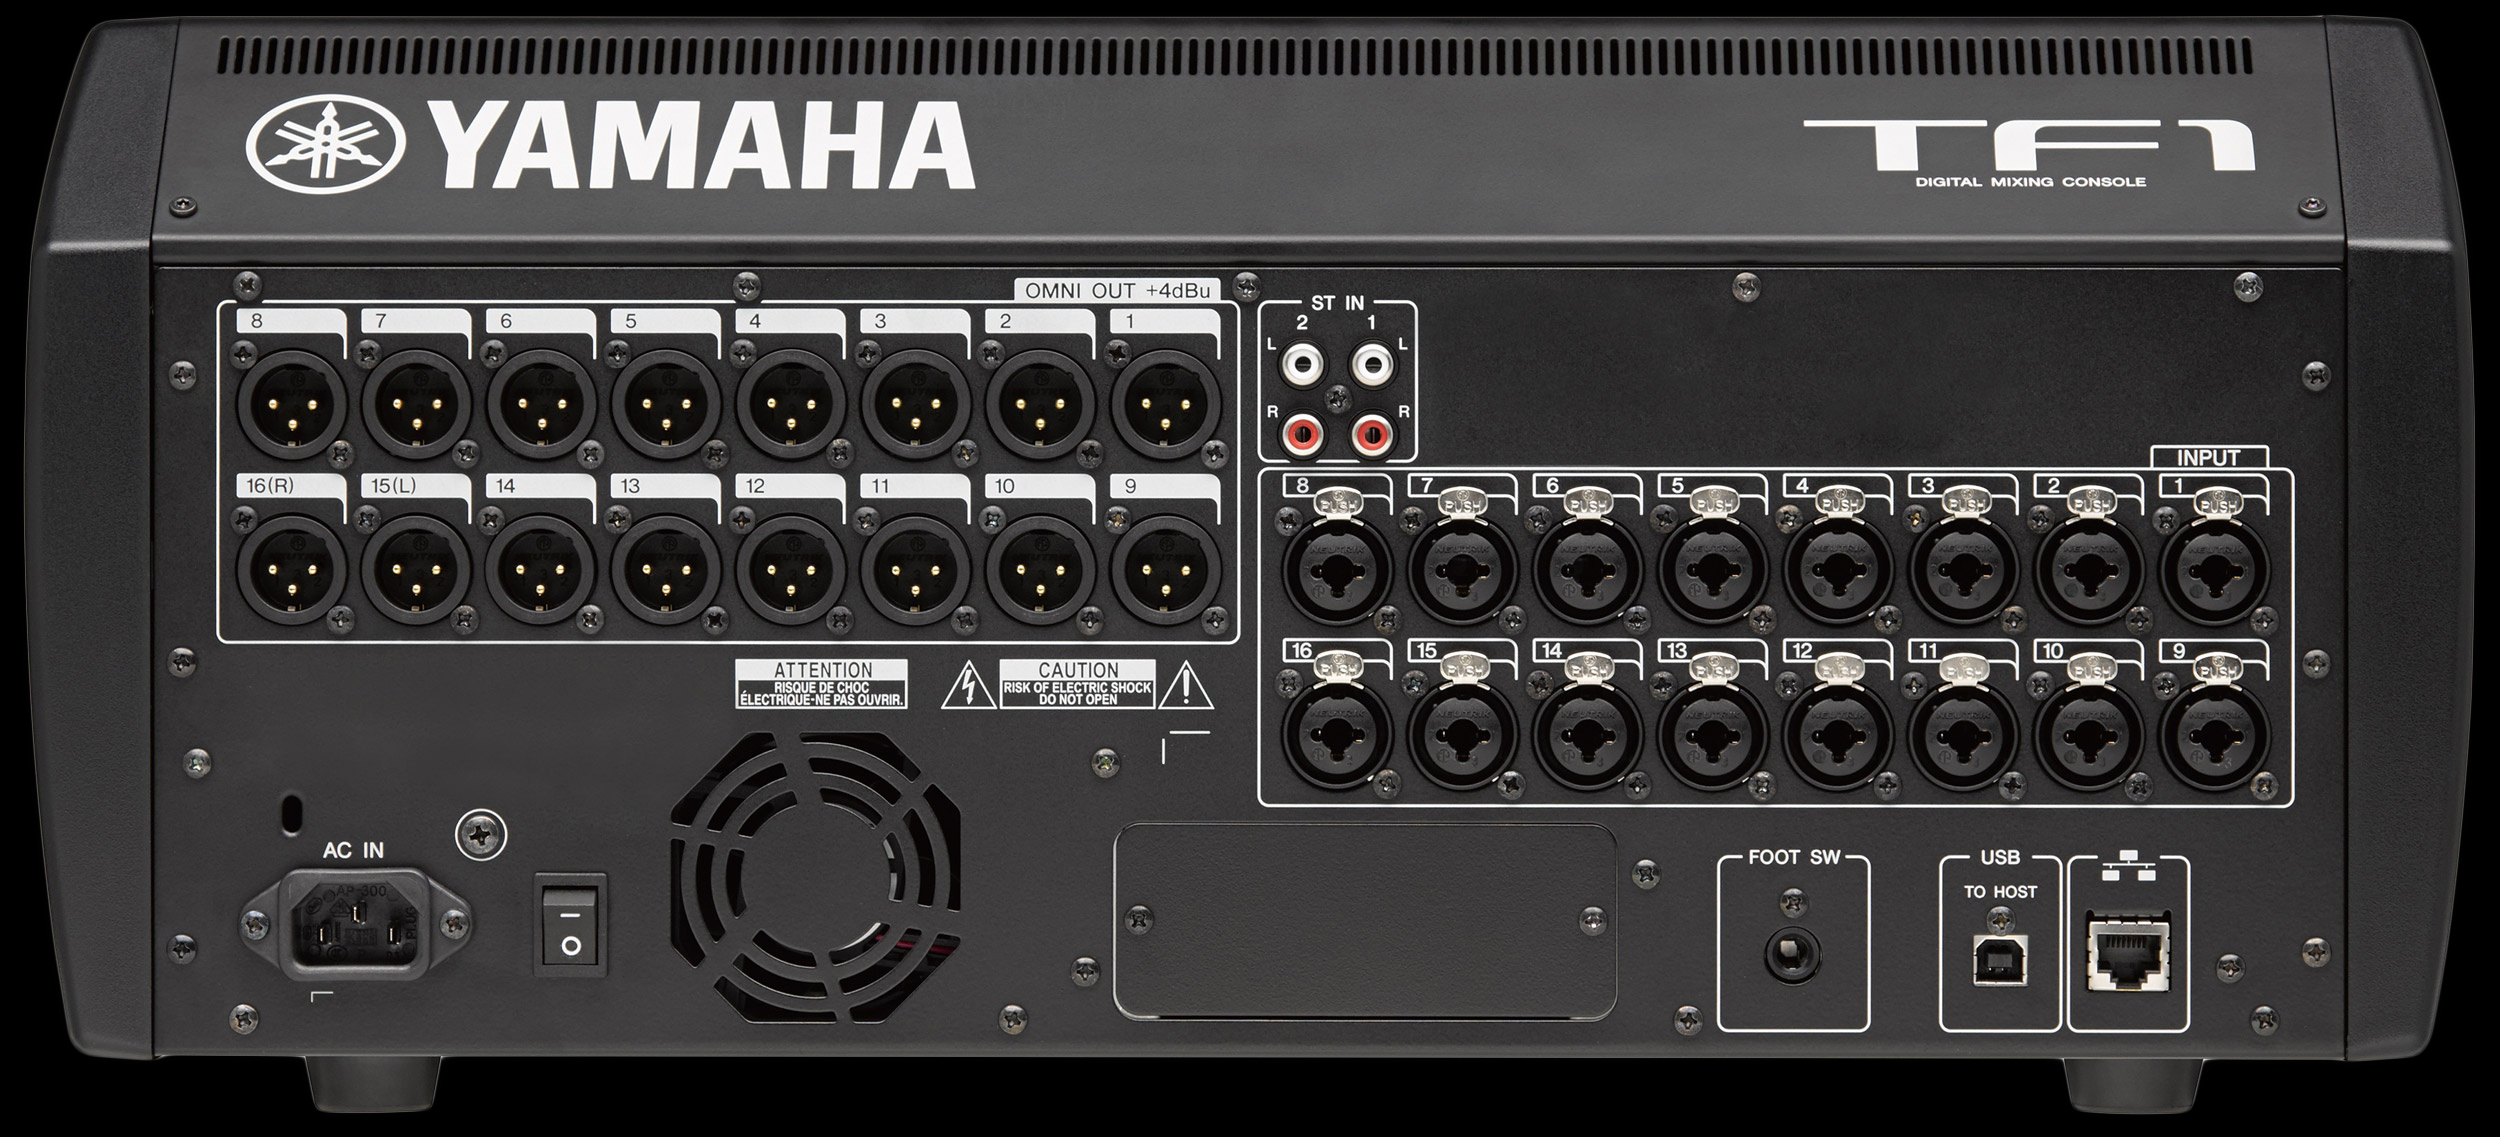 Yamaha TF1 - Digital mixer with DSP - 16-channel - rack-mountable - image 3 of 3